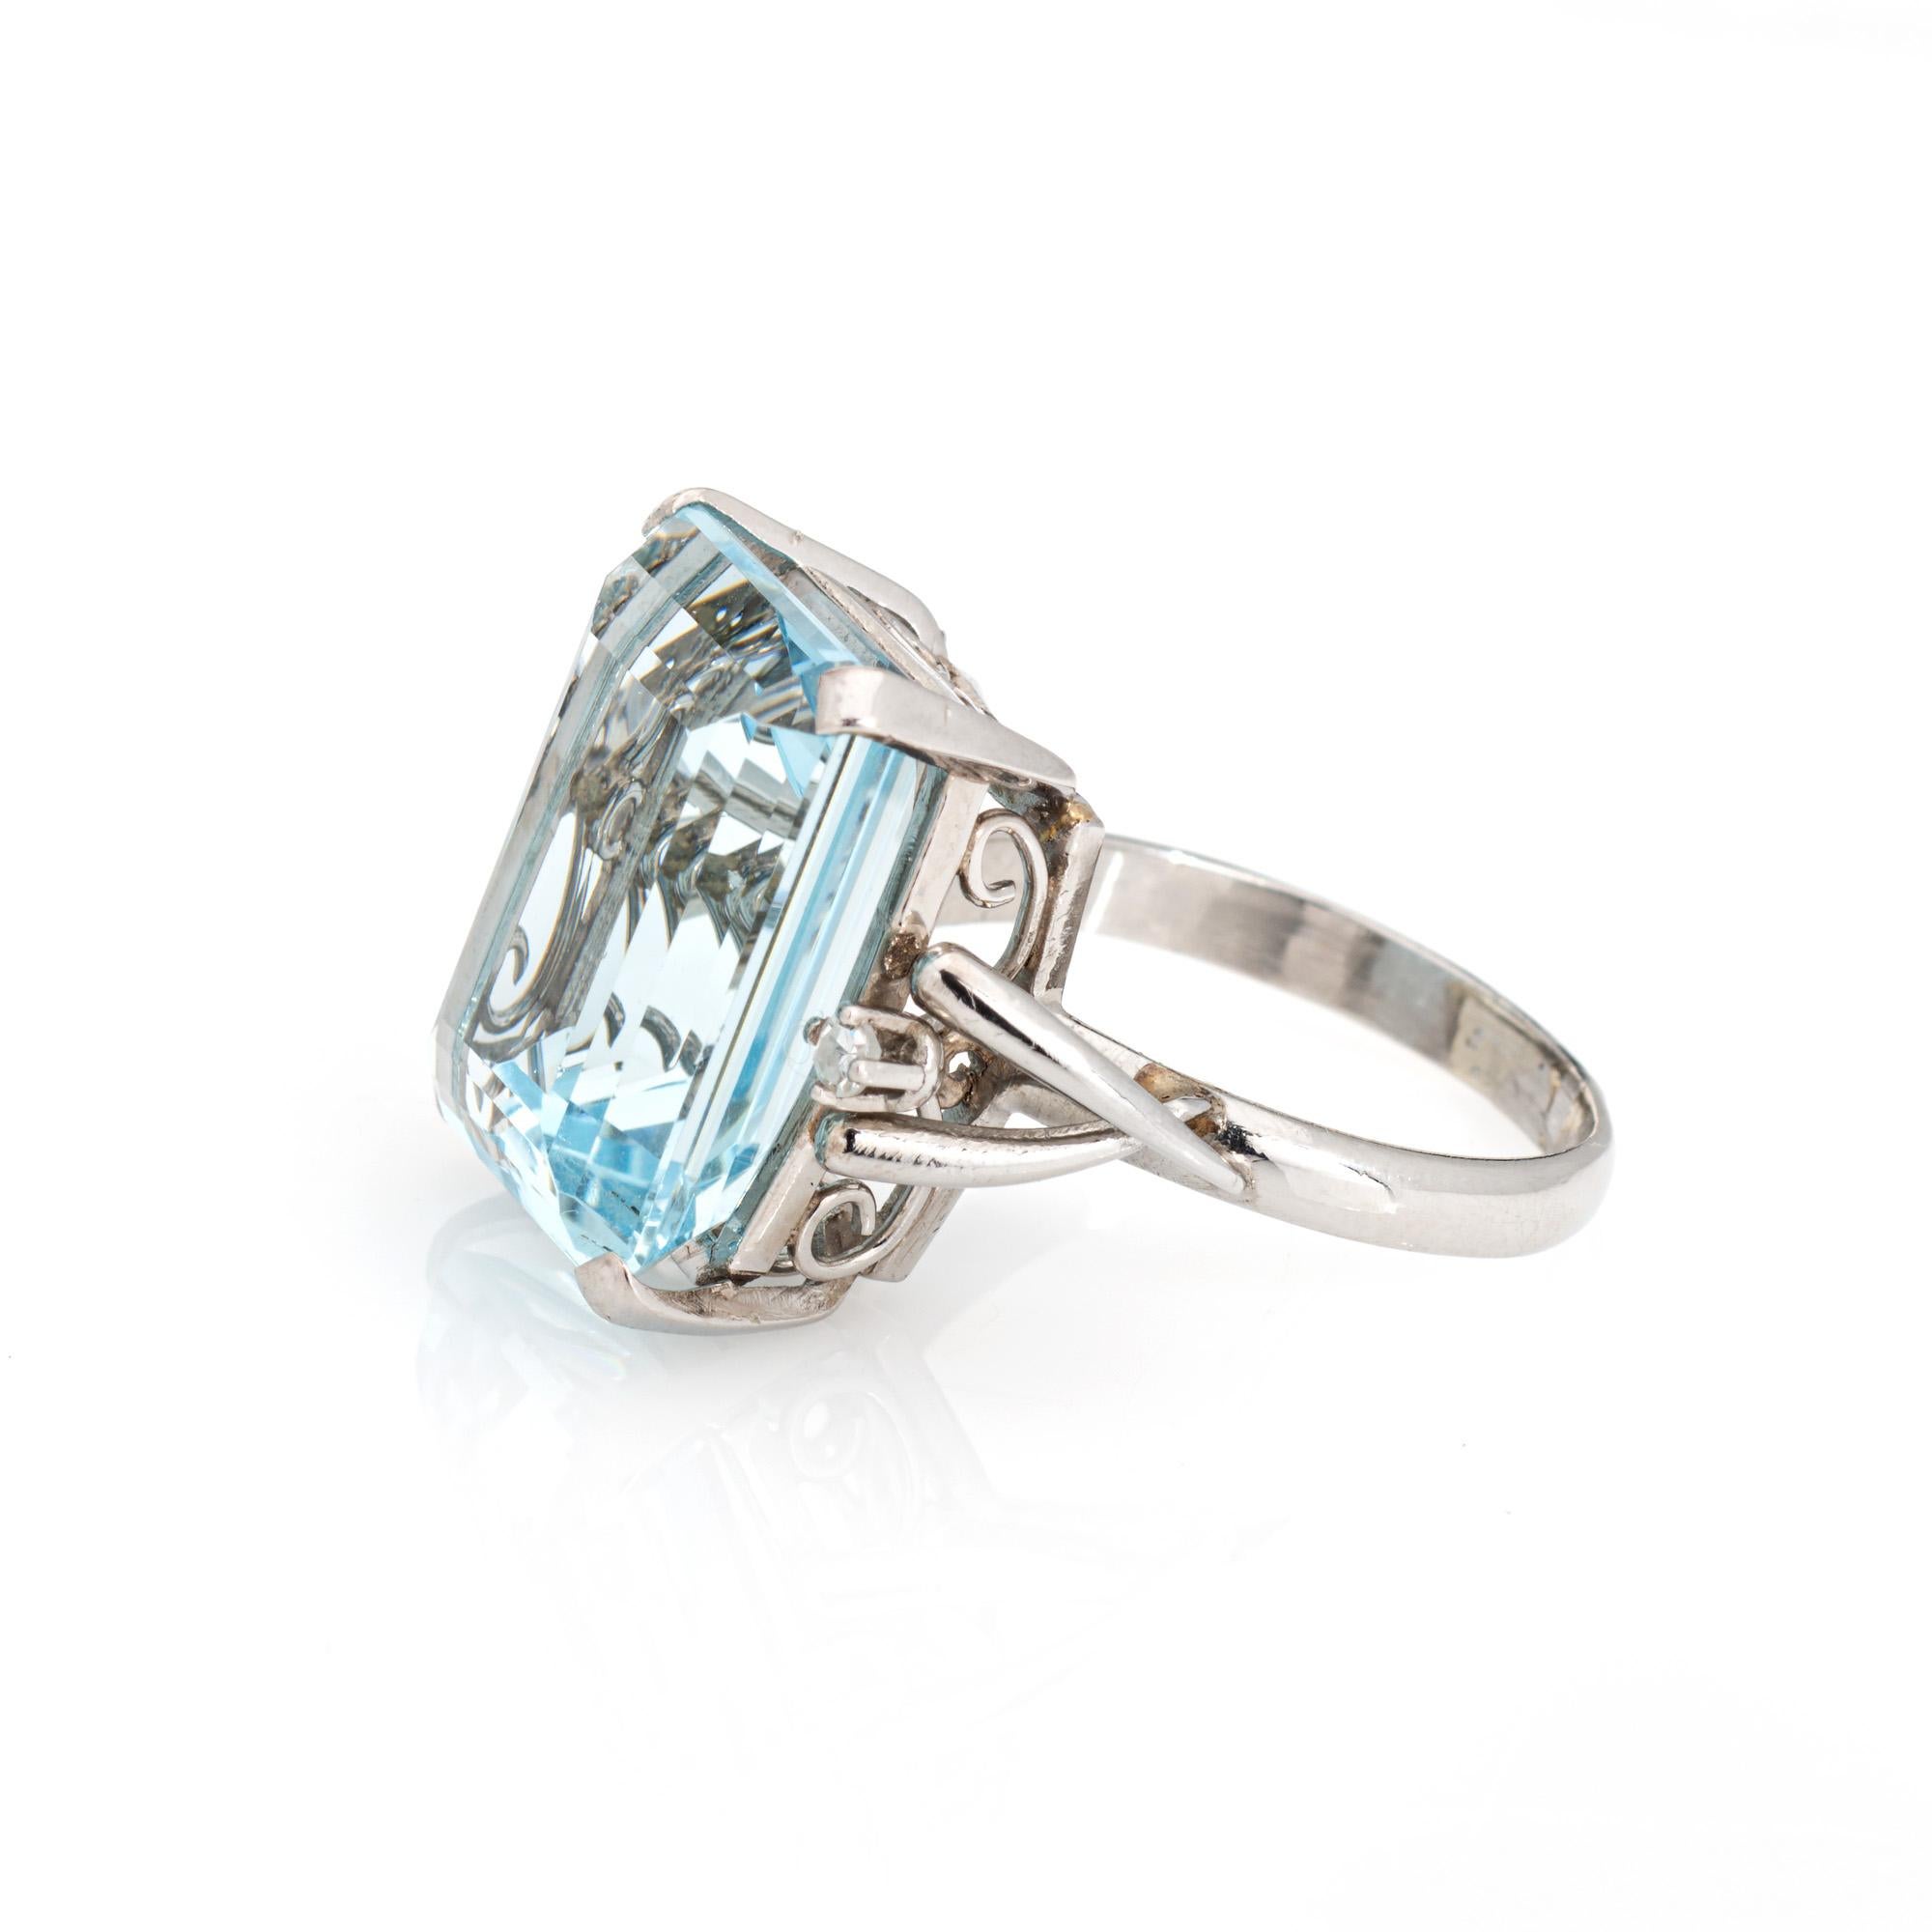 10ct Aquamarine Diamond Ring Platinum Sz 6 Cocktail Jewelry Emerald Cut  In Good Condition For Sale In Torrance, CA